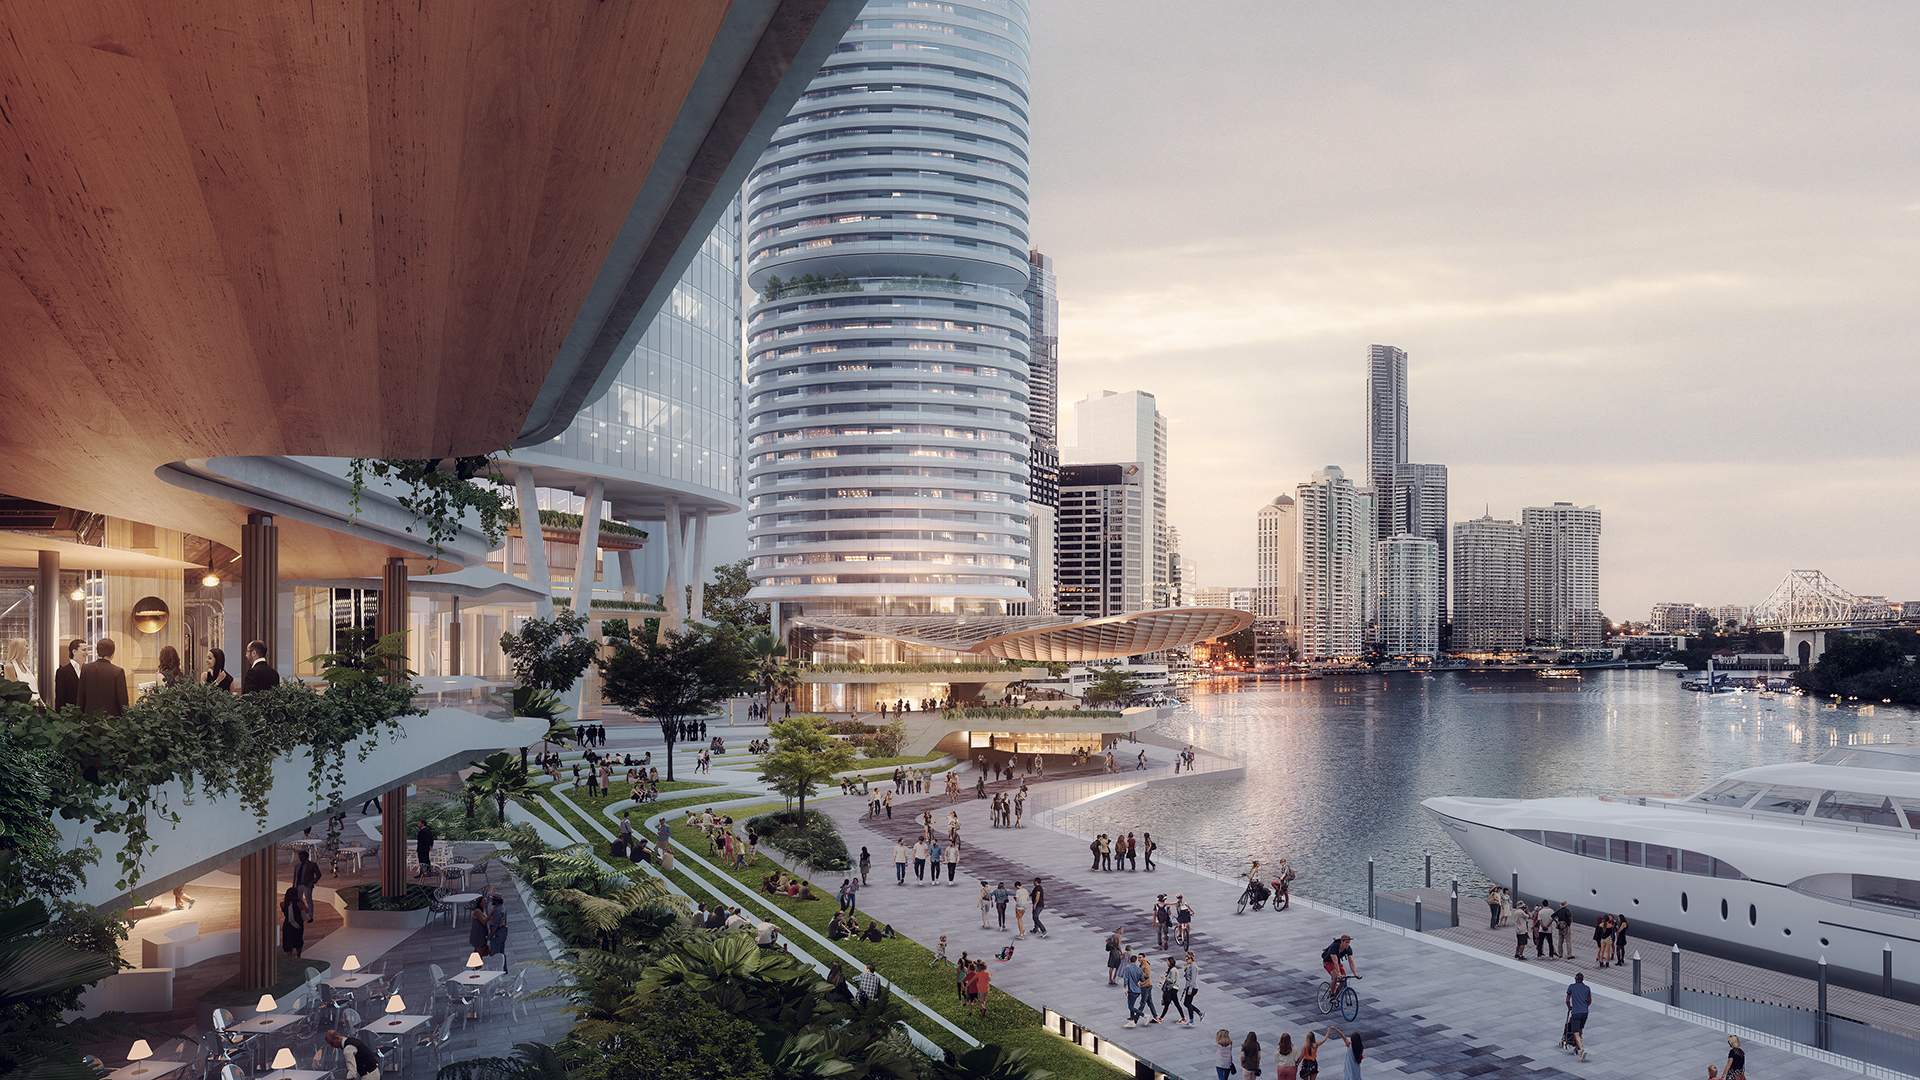 Brisbane's Eagle Street Pier to Make Way for New $1.4 Billion Waterfront Precinct